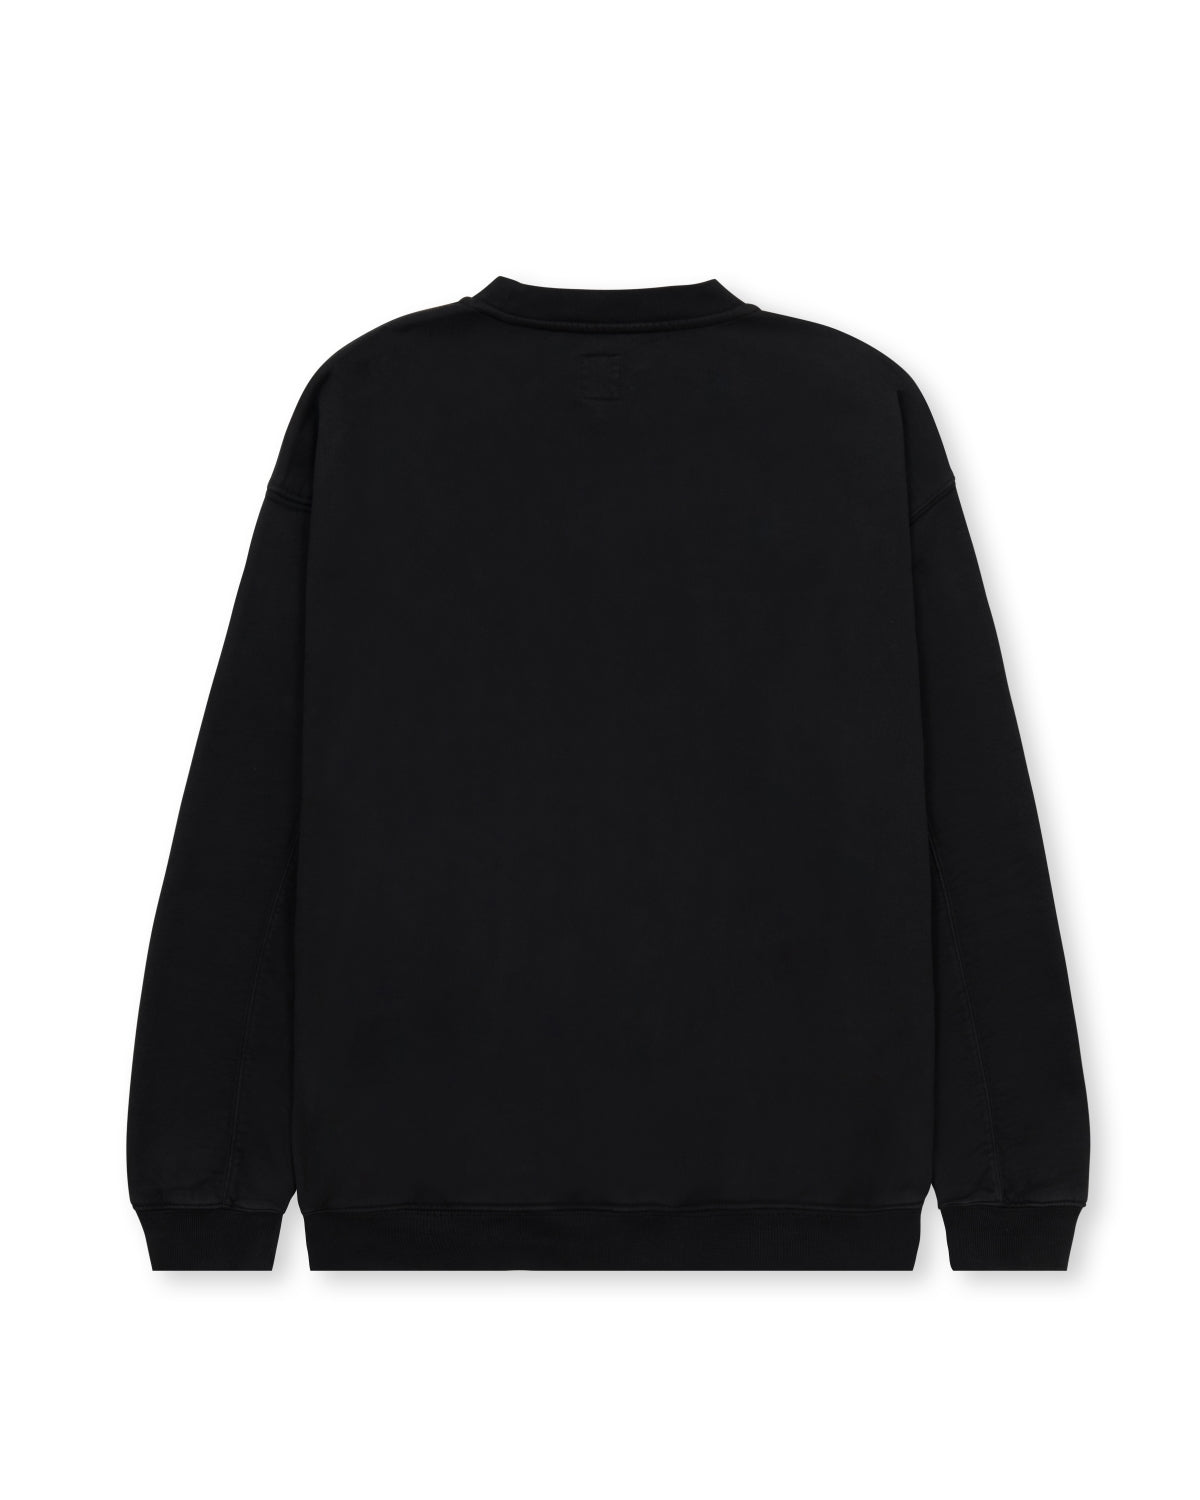 Final Stand Crewneck Sweatshirt - Black